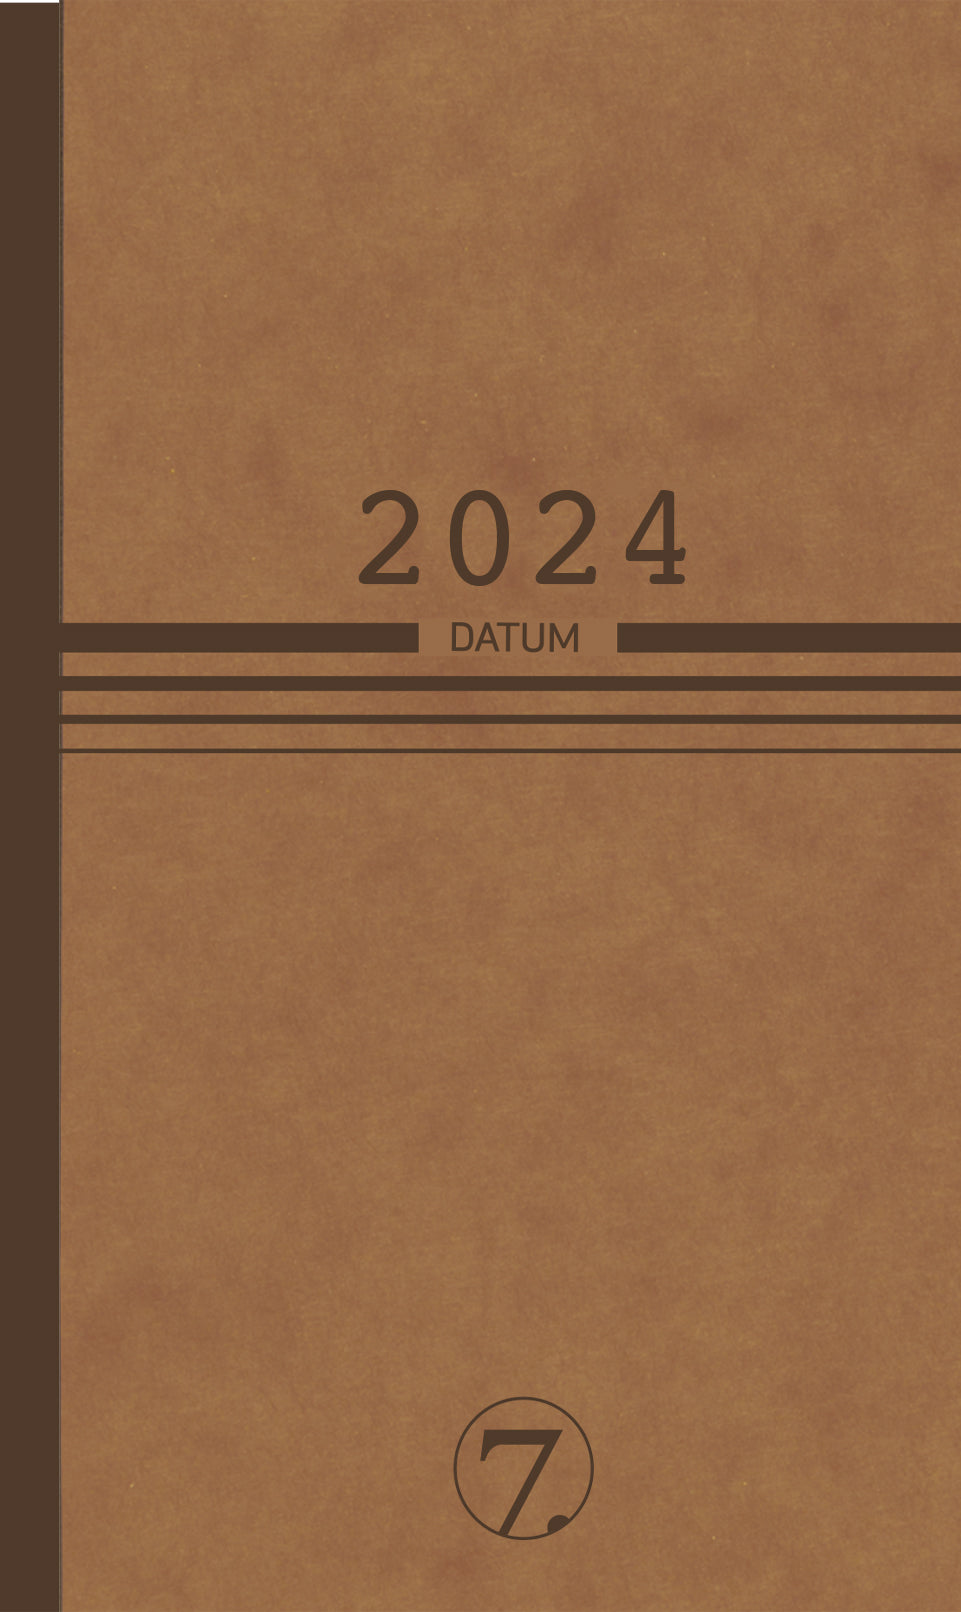 7.sans Datum Nature, kartong 2024, Front